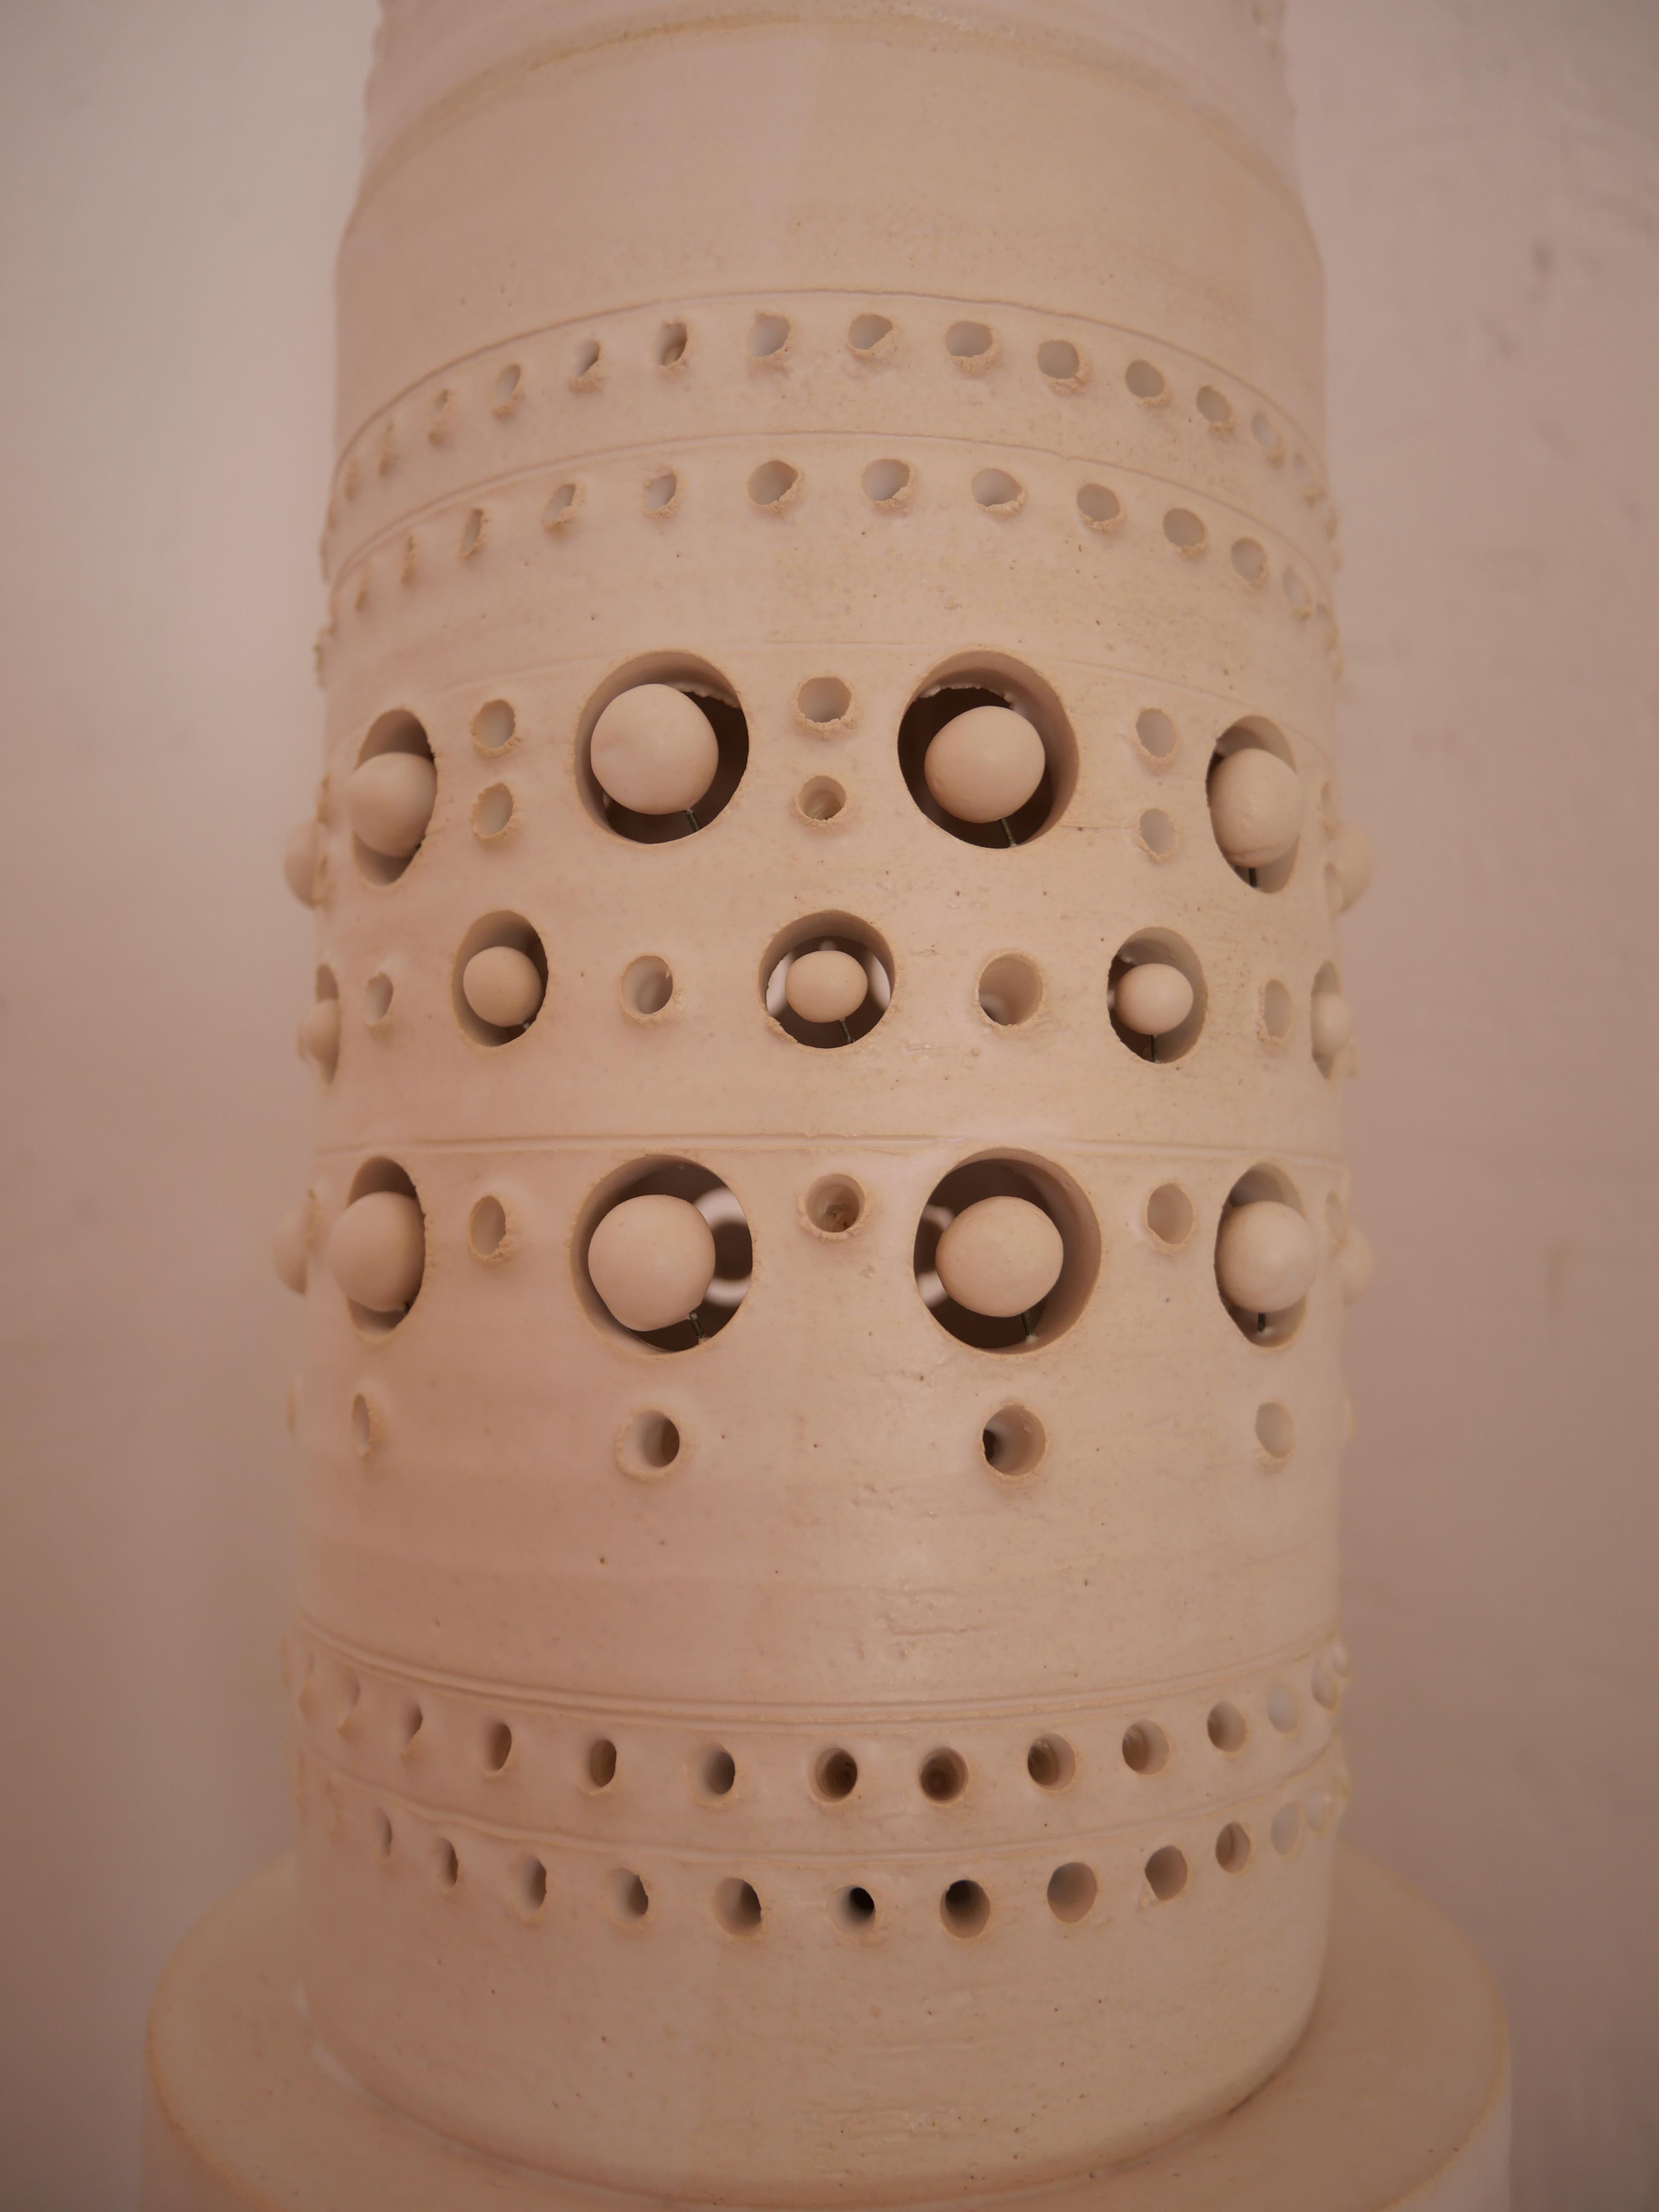 Iconic Georges Pelletier Set of 3 TOTEM Floor Lamps in Enameled Ceramic 2